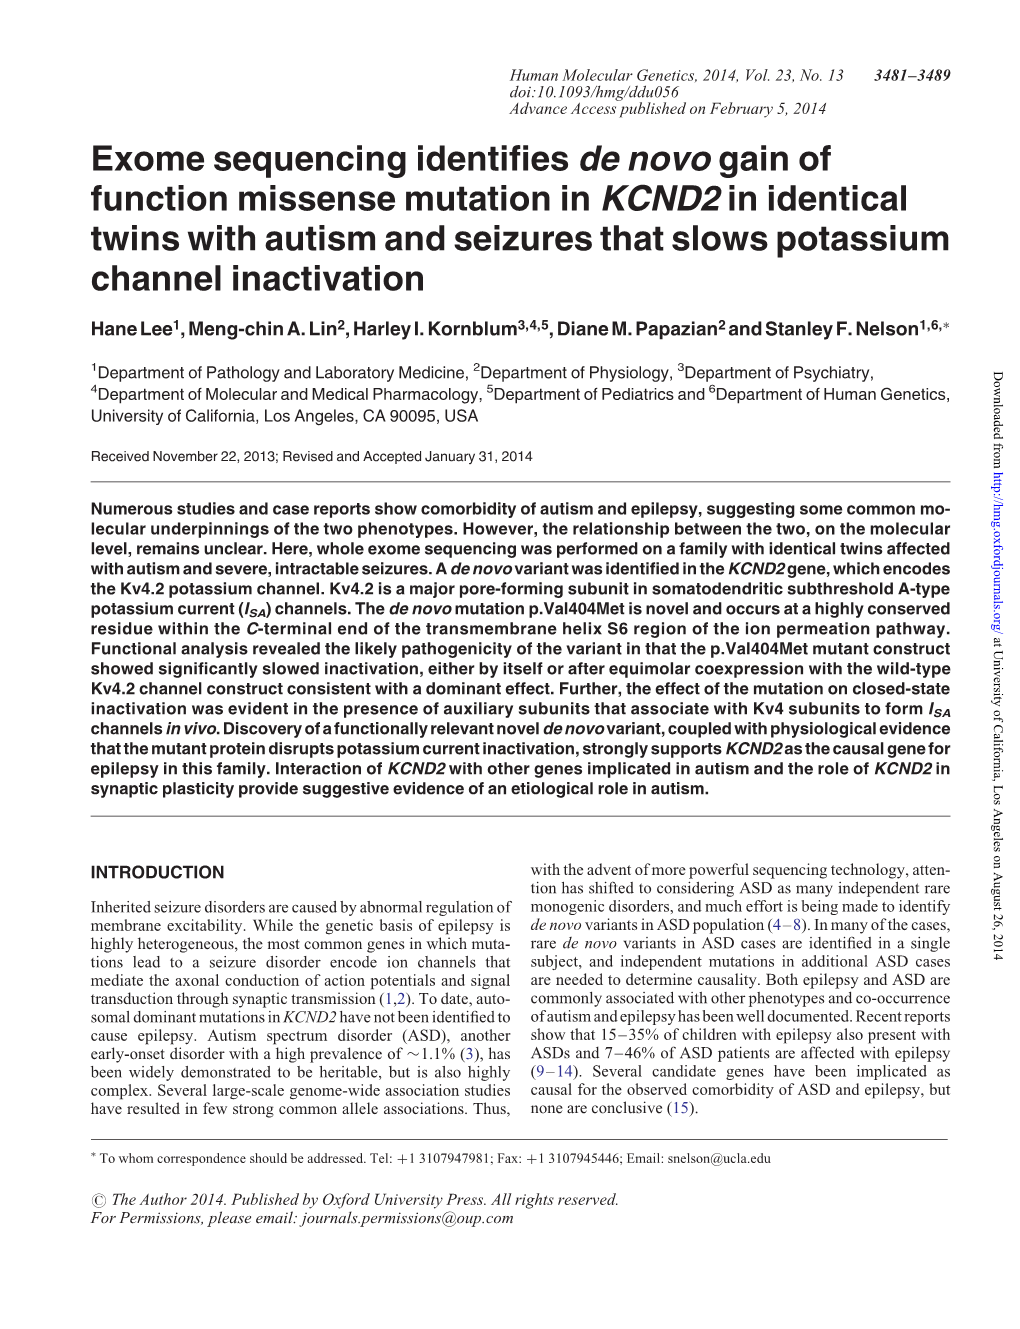 Exome Sequencing Identifies De Novo Gain of Function Missense Mutation